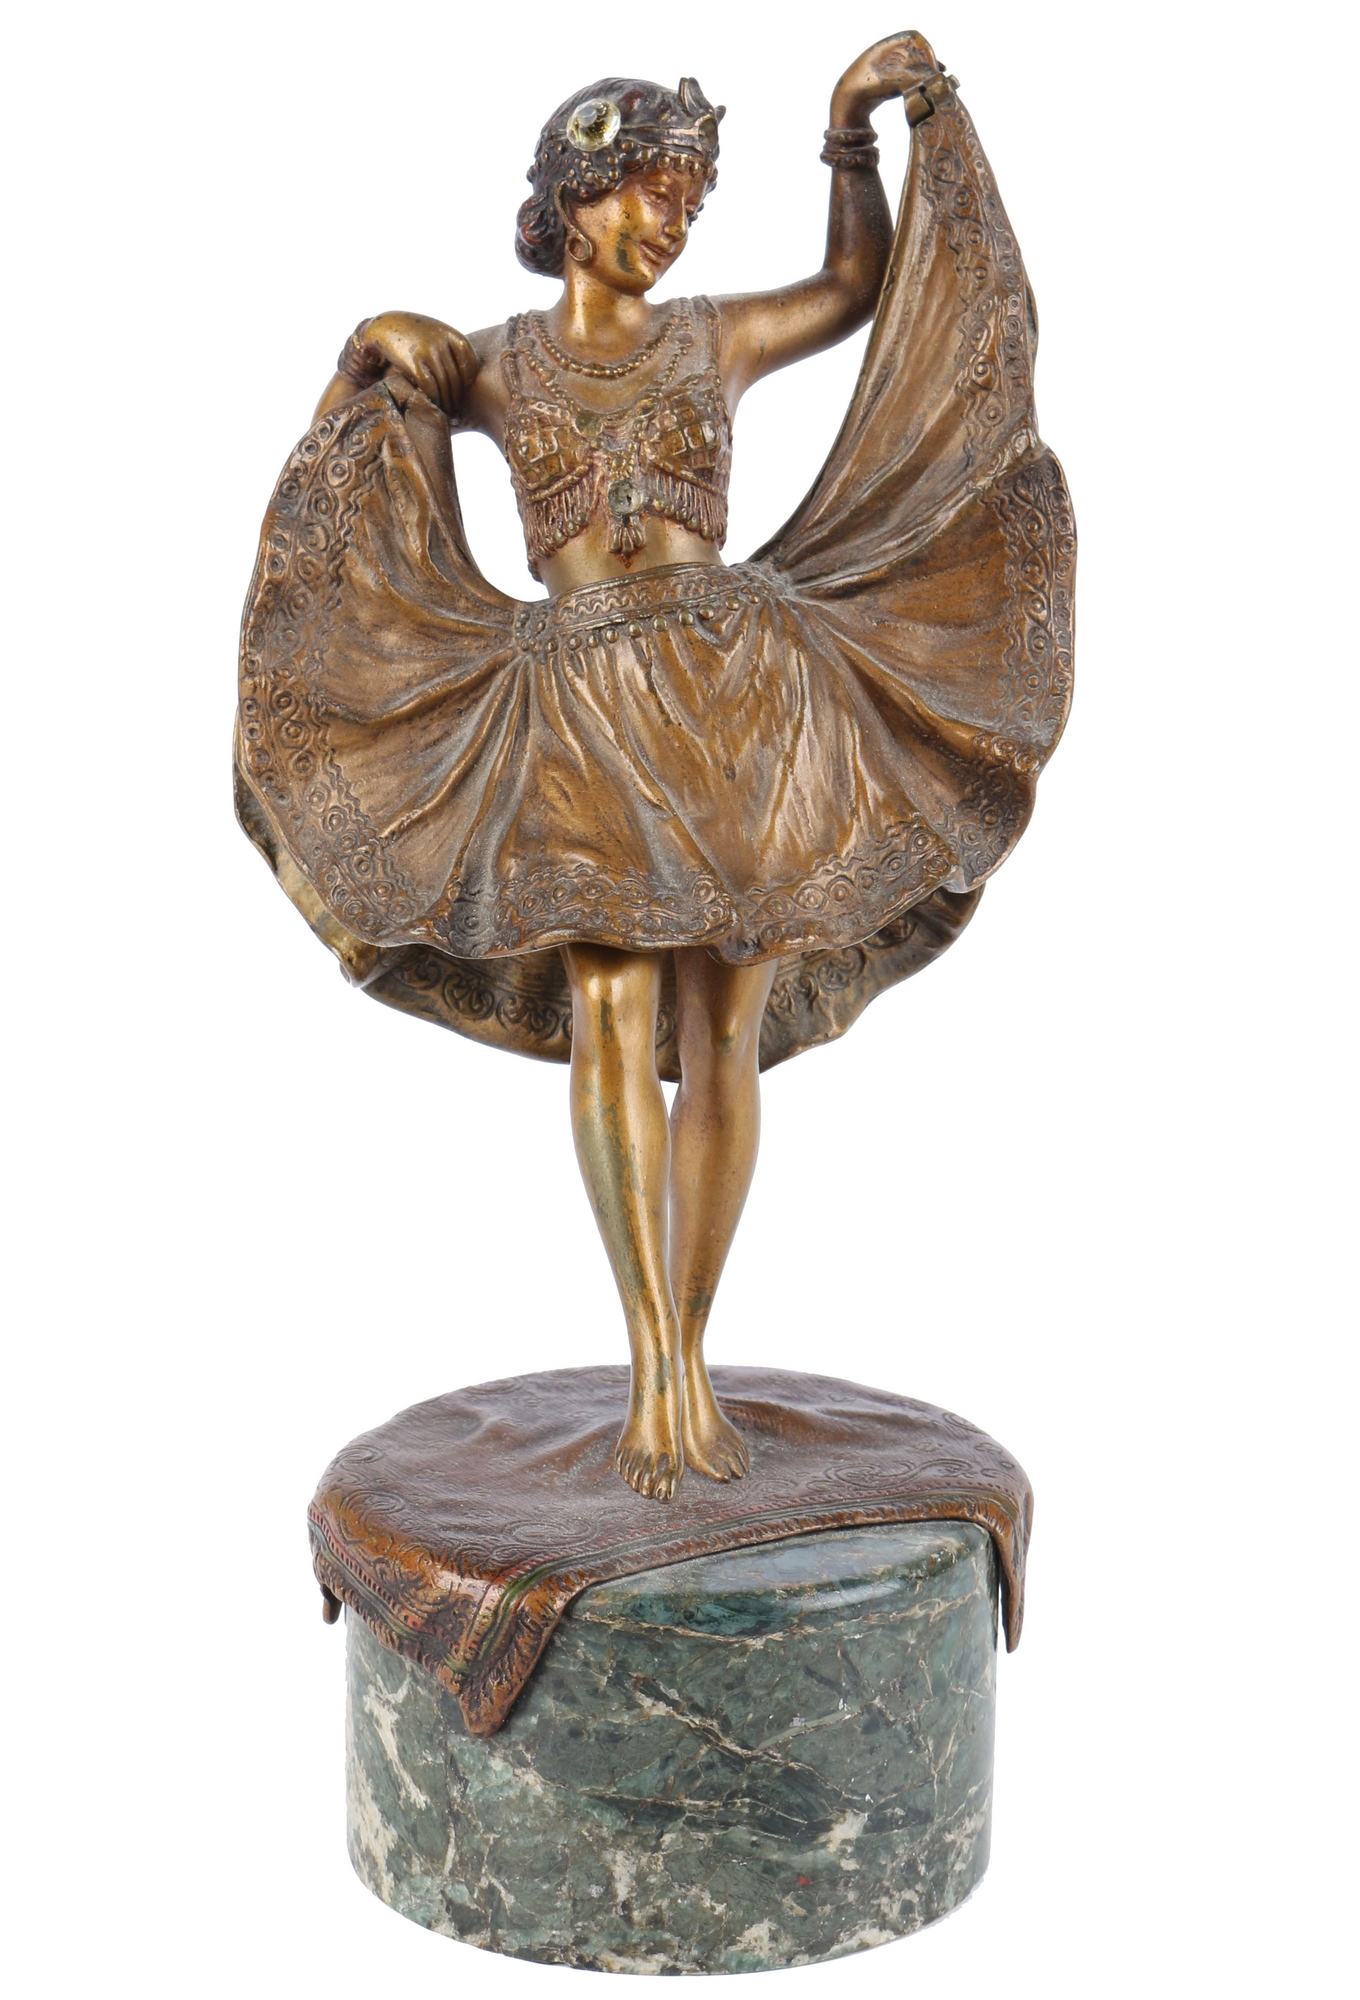 Bergmann Wiener Bronze erotische Tänzerin um 1900, bronze oriental female dancer,